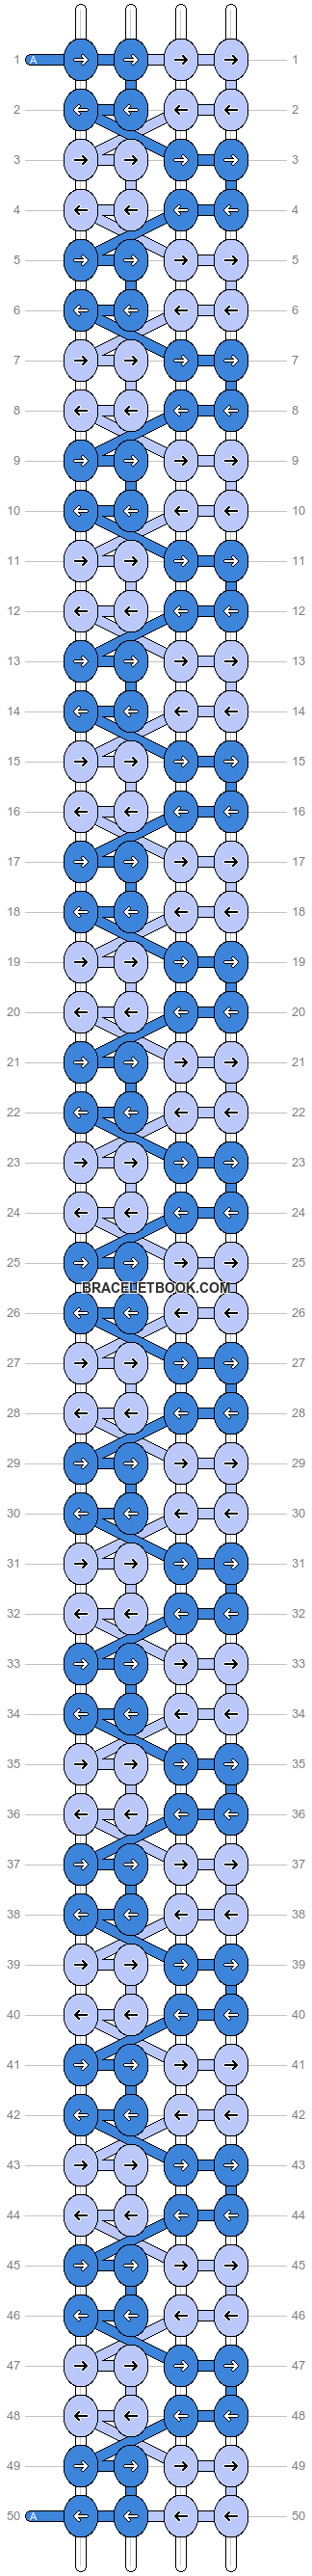 Alpha pattern #17866 variation #22854 pattern